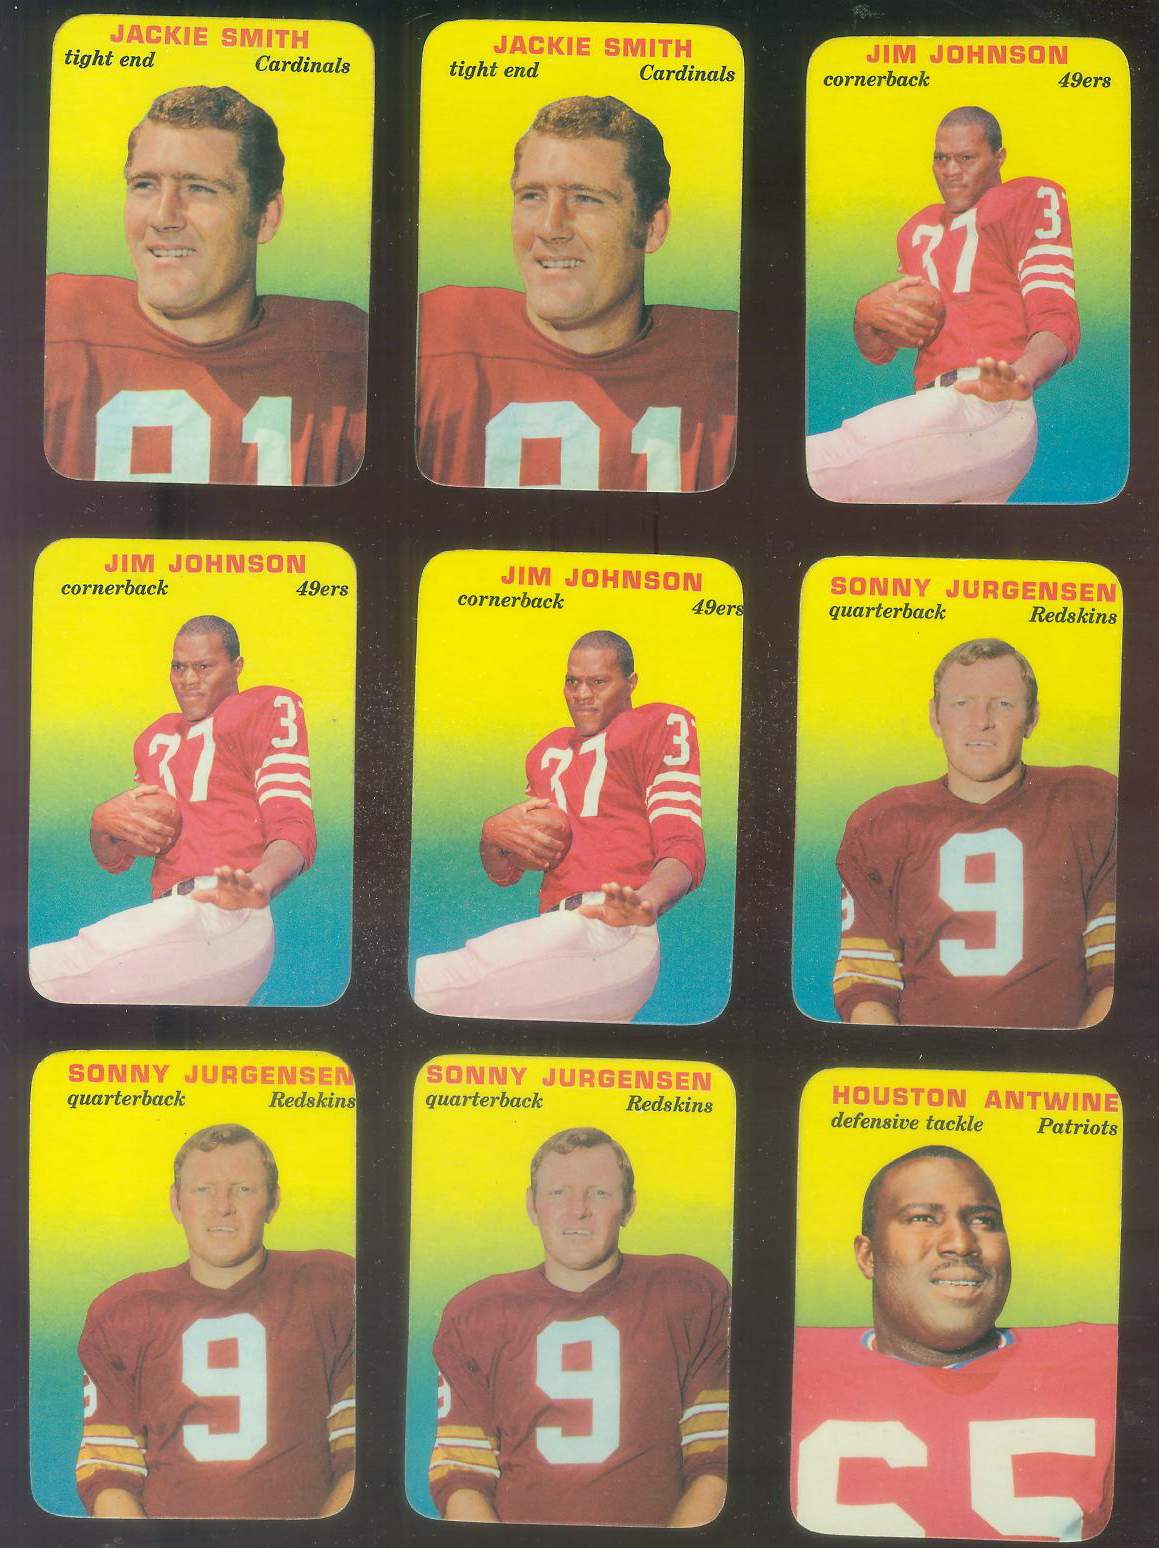 1970 Topps Glossy #20 Sonny Jurgensen - FB Insert (Redskins) Football cards value